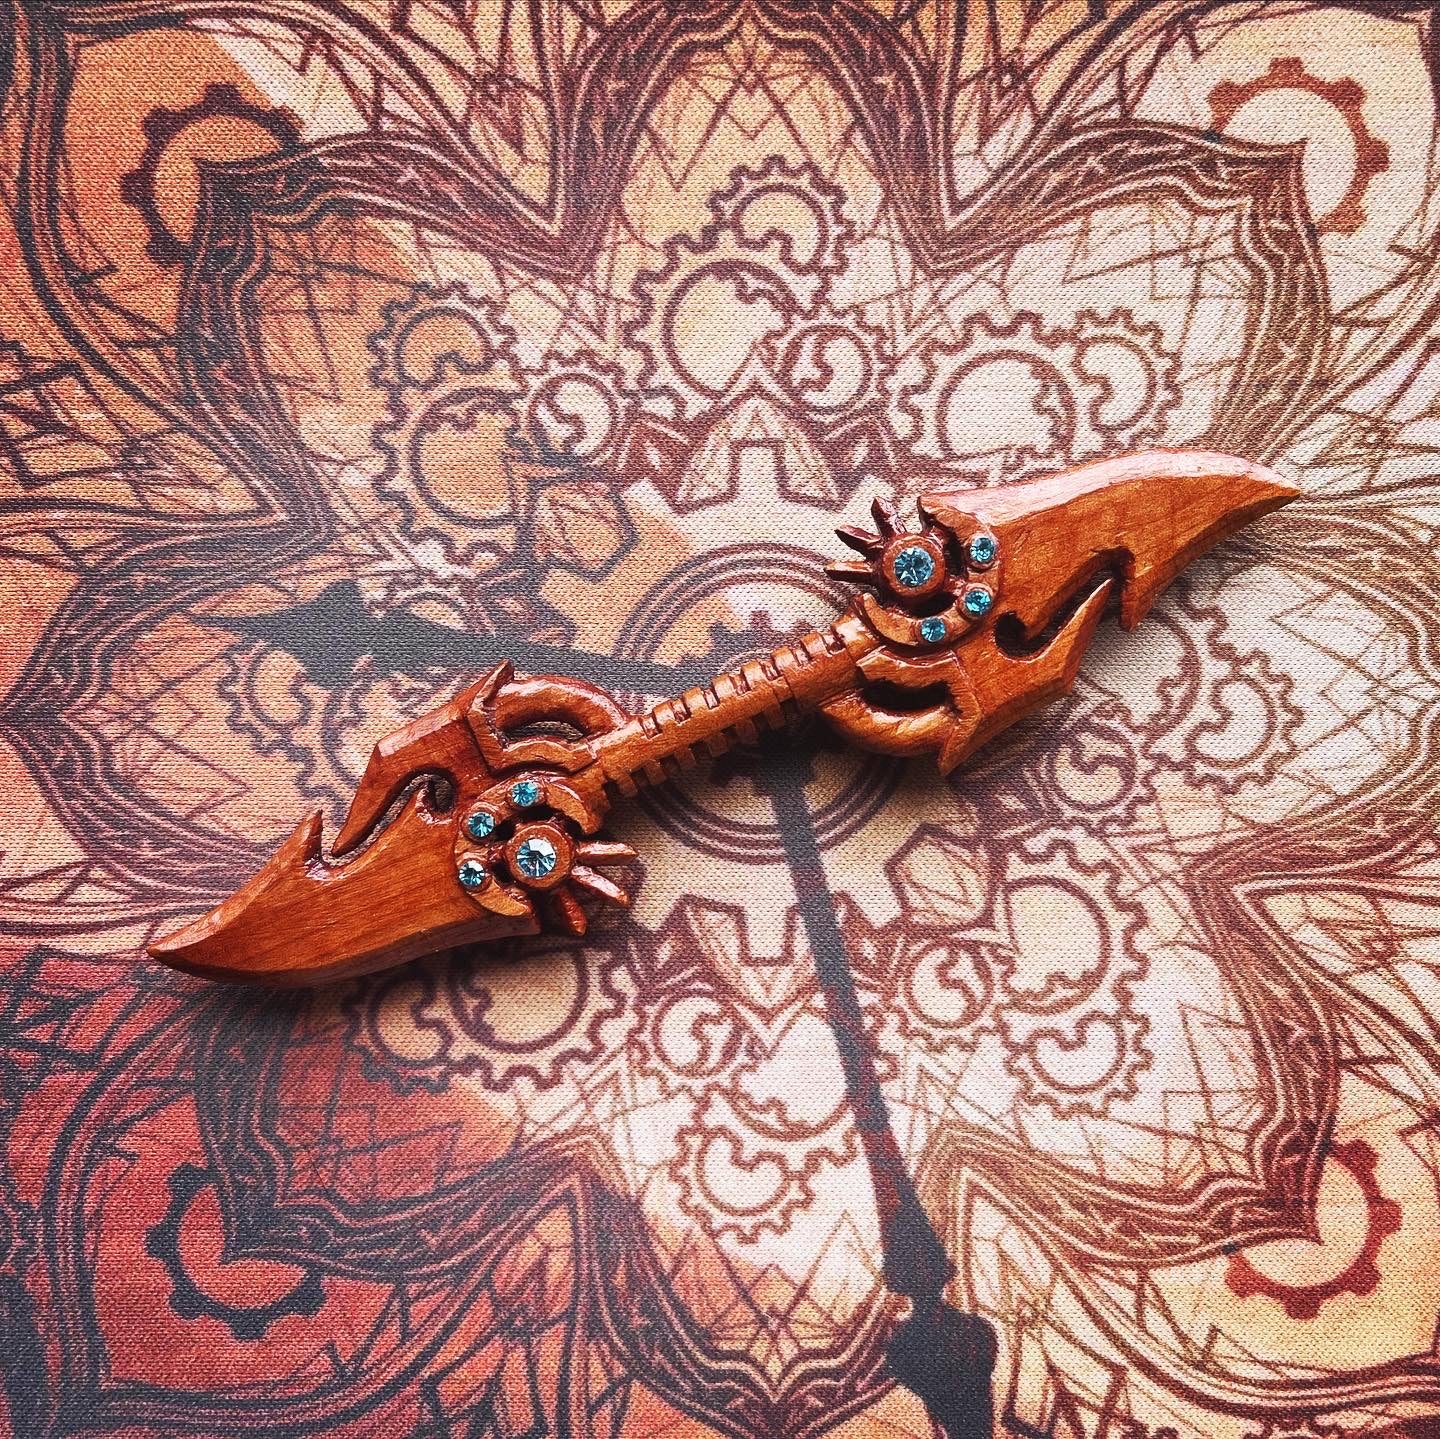 3d epic sword wood carving